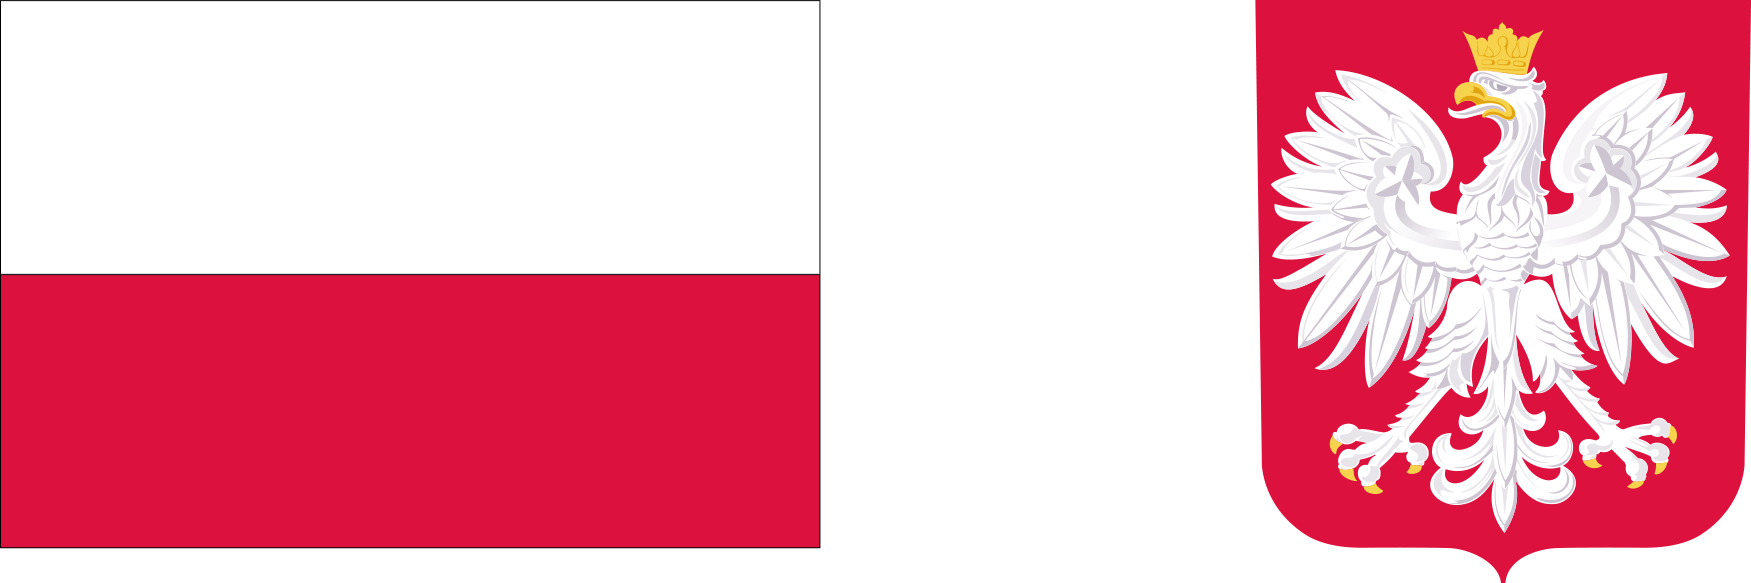 flaga polski oraz herb